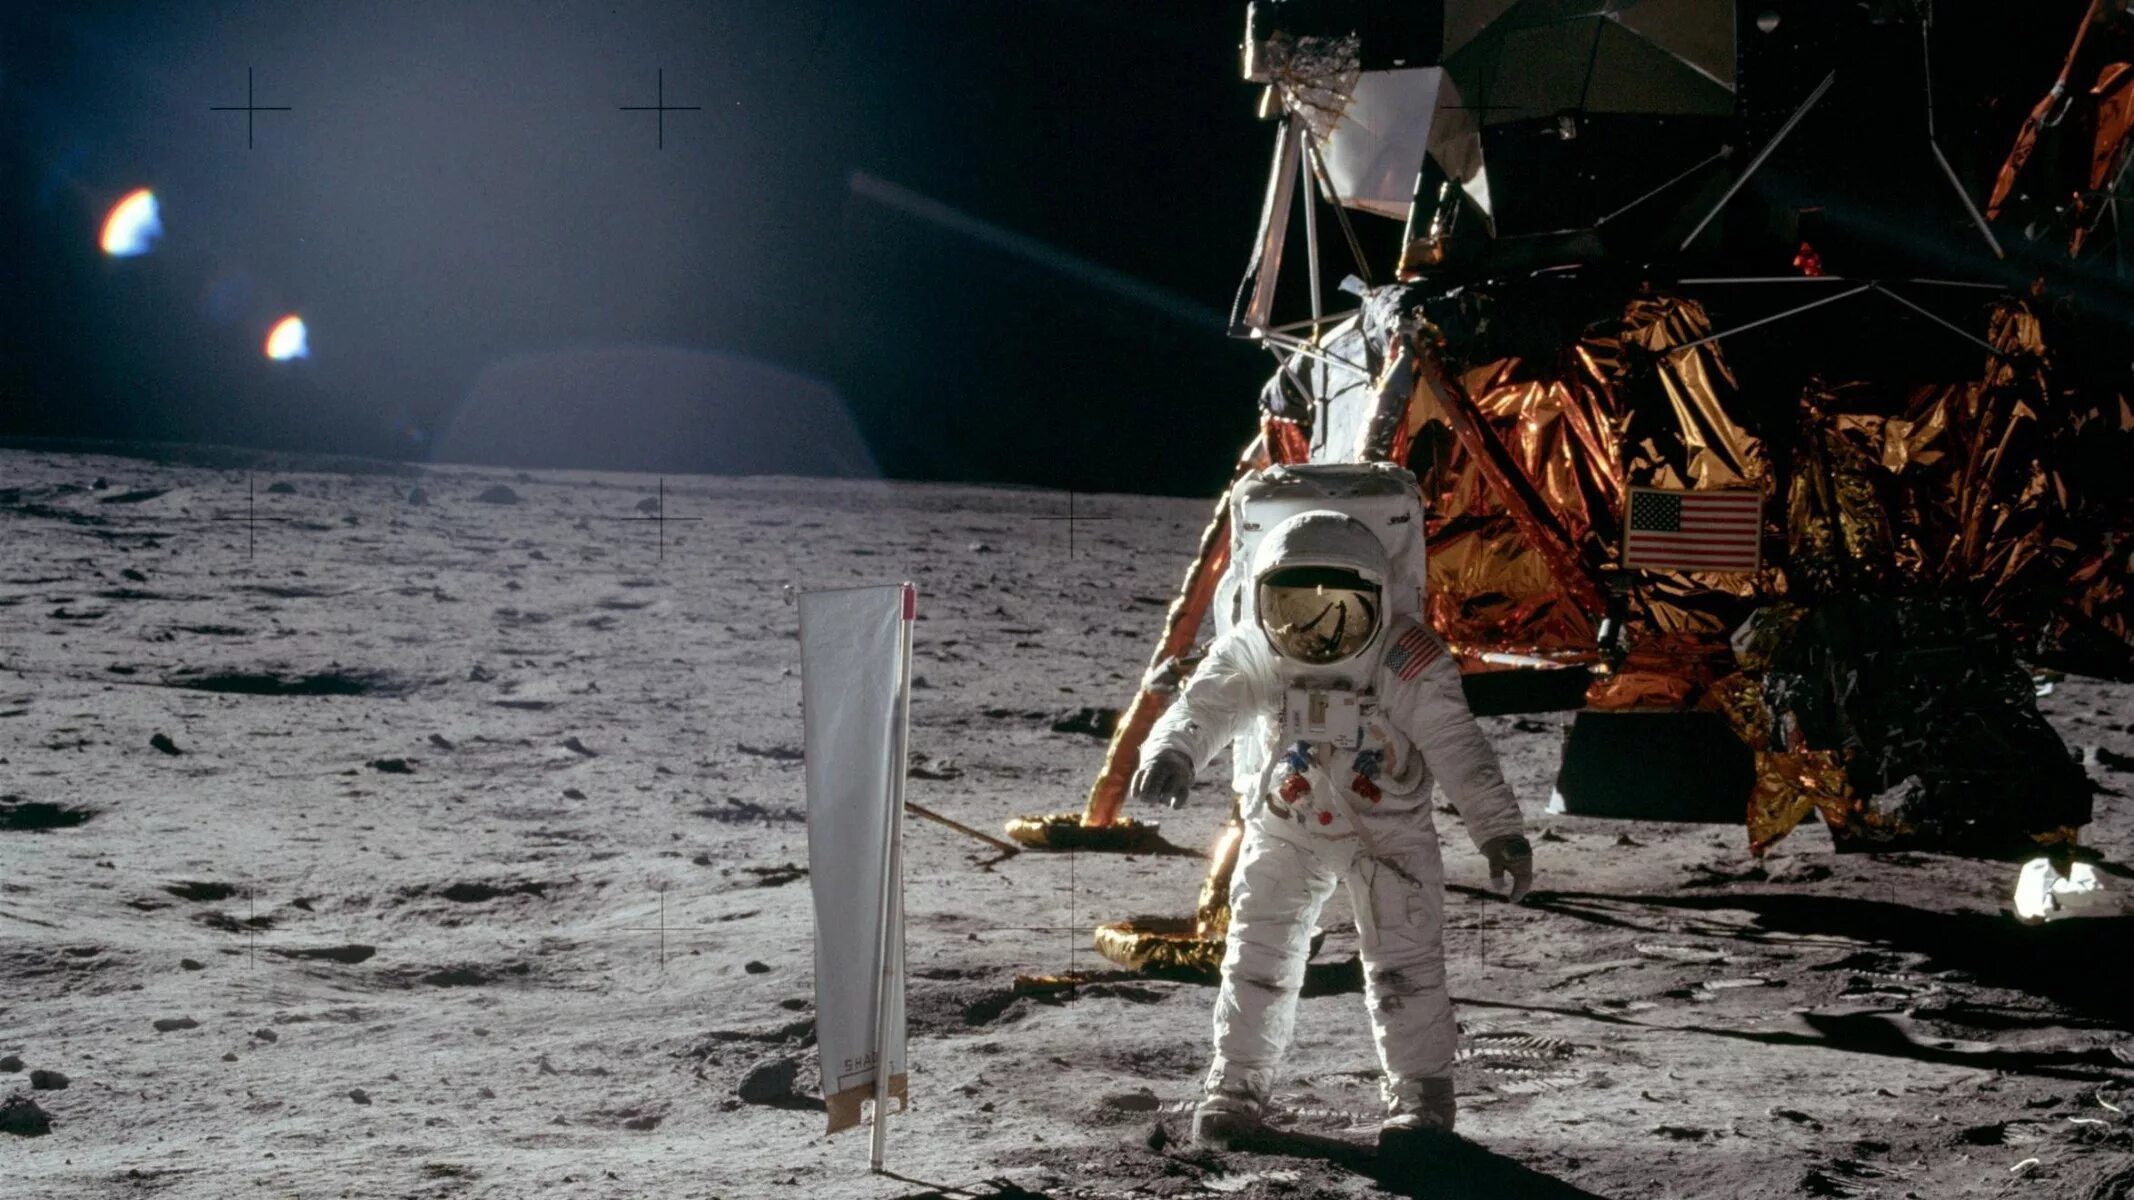 The astronauts on the moon. Апполо 11 на Луне.